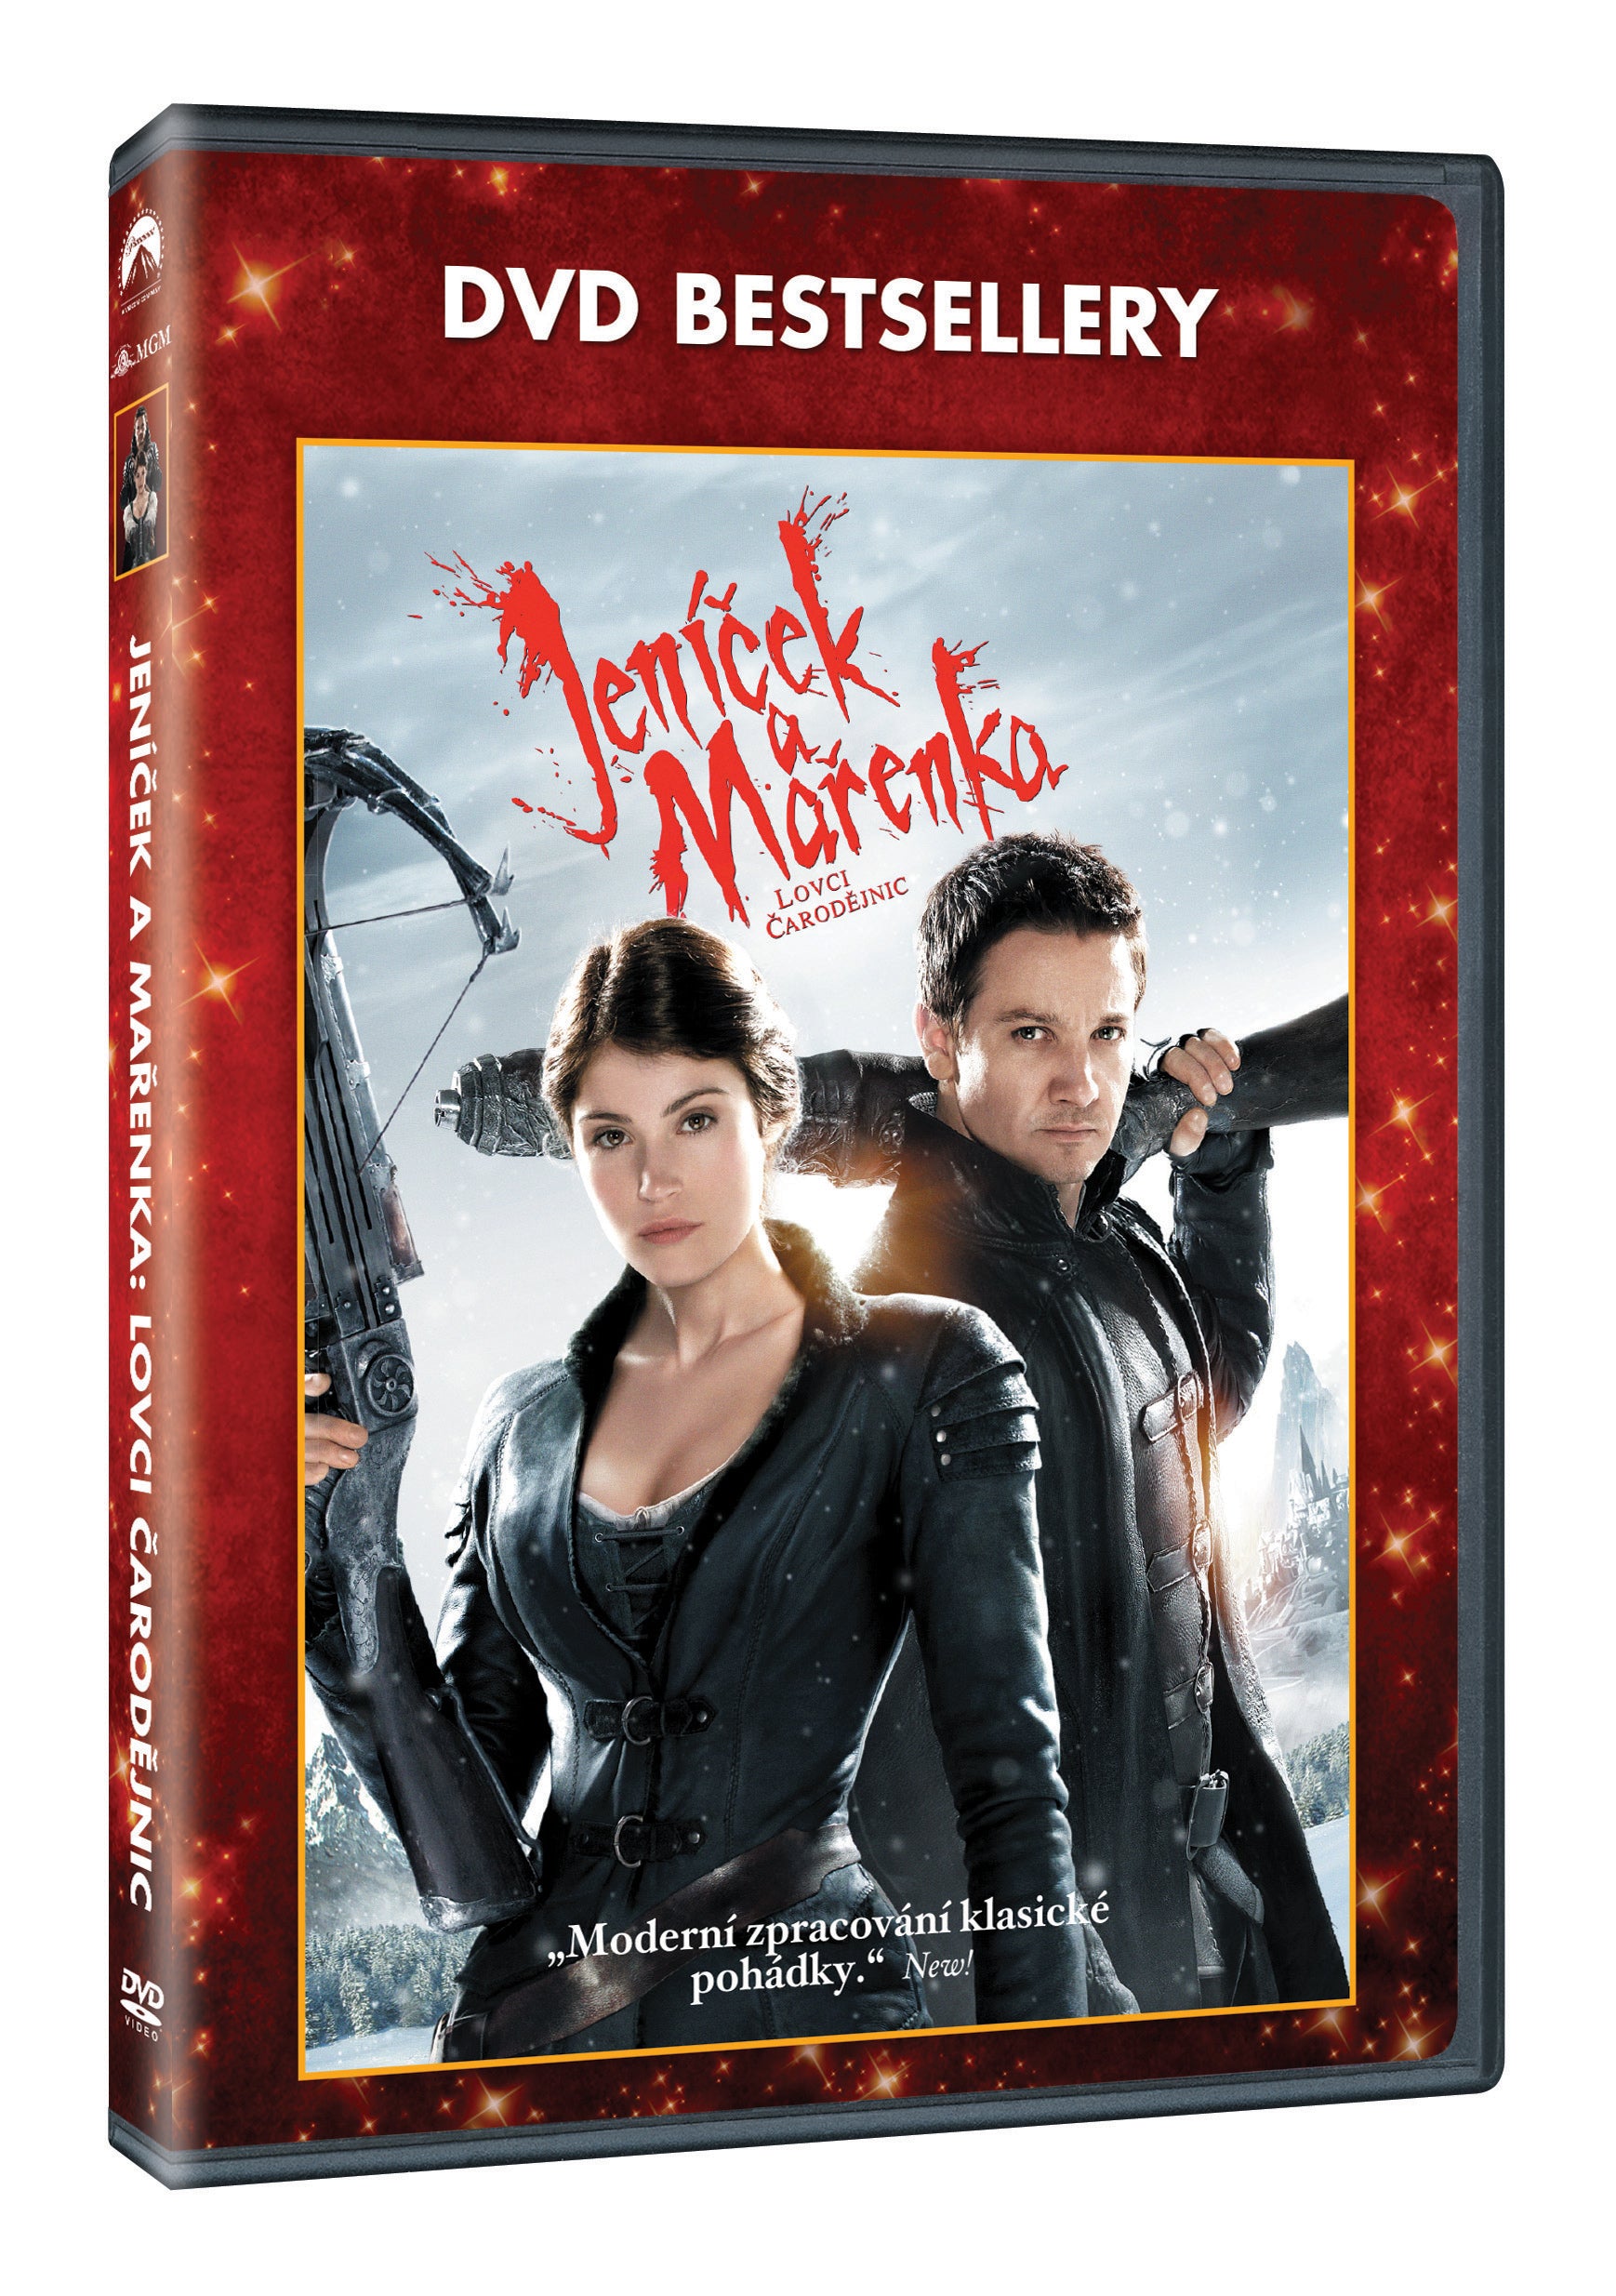 Jenicek a Marenka: Lovci carodejnic – DVD-Bestseller (Hänsel und Gretel: Hexenjäger)